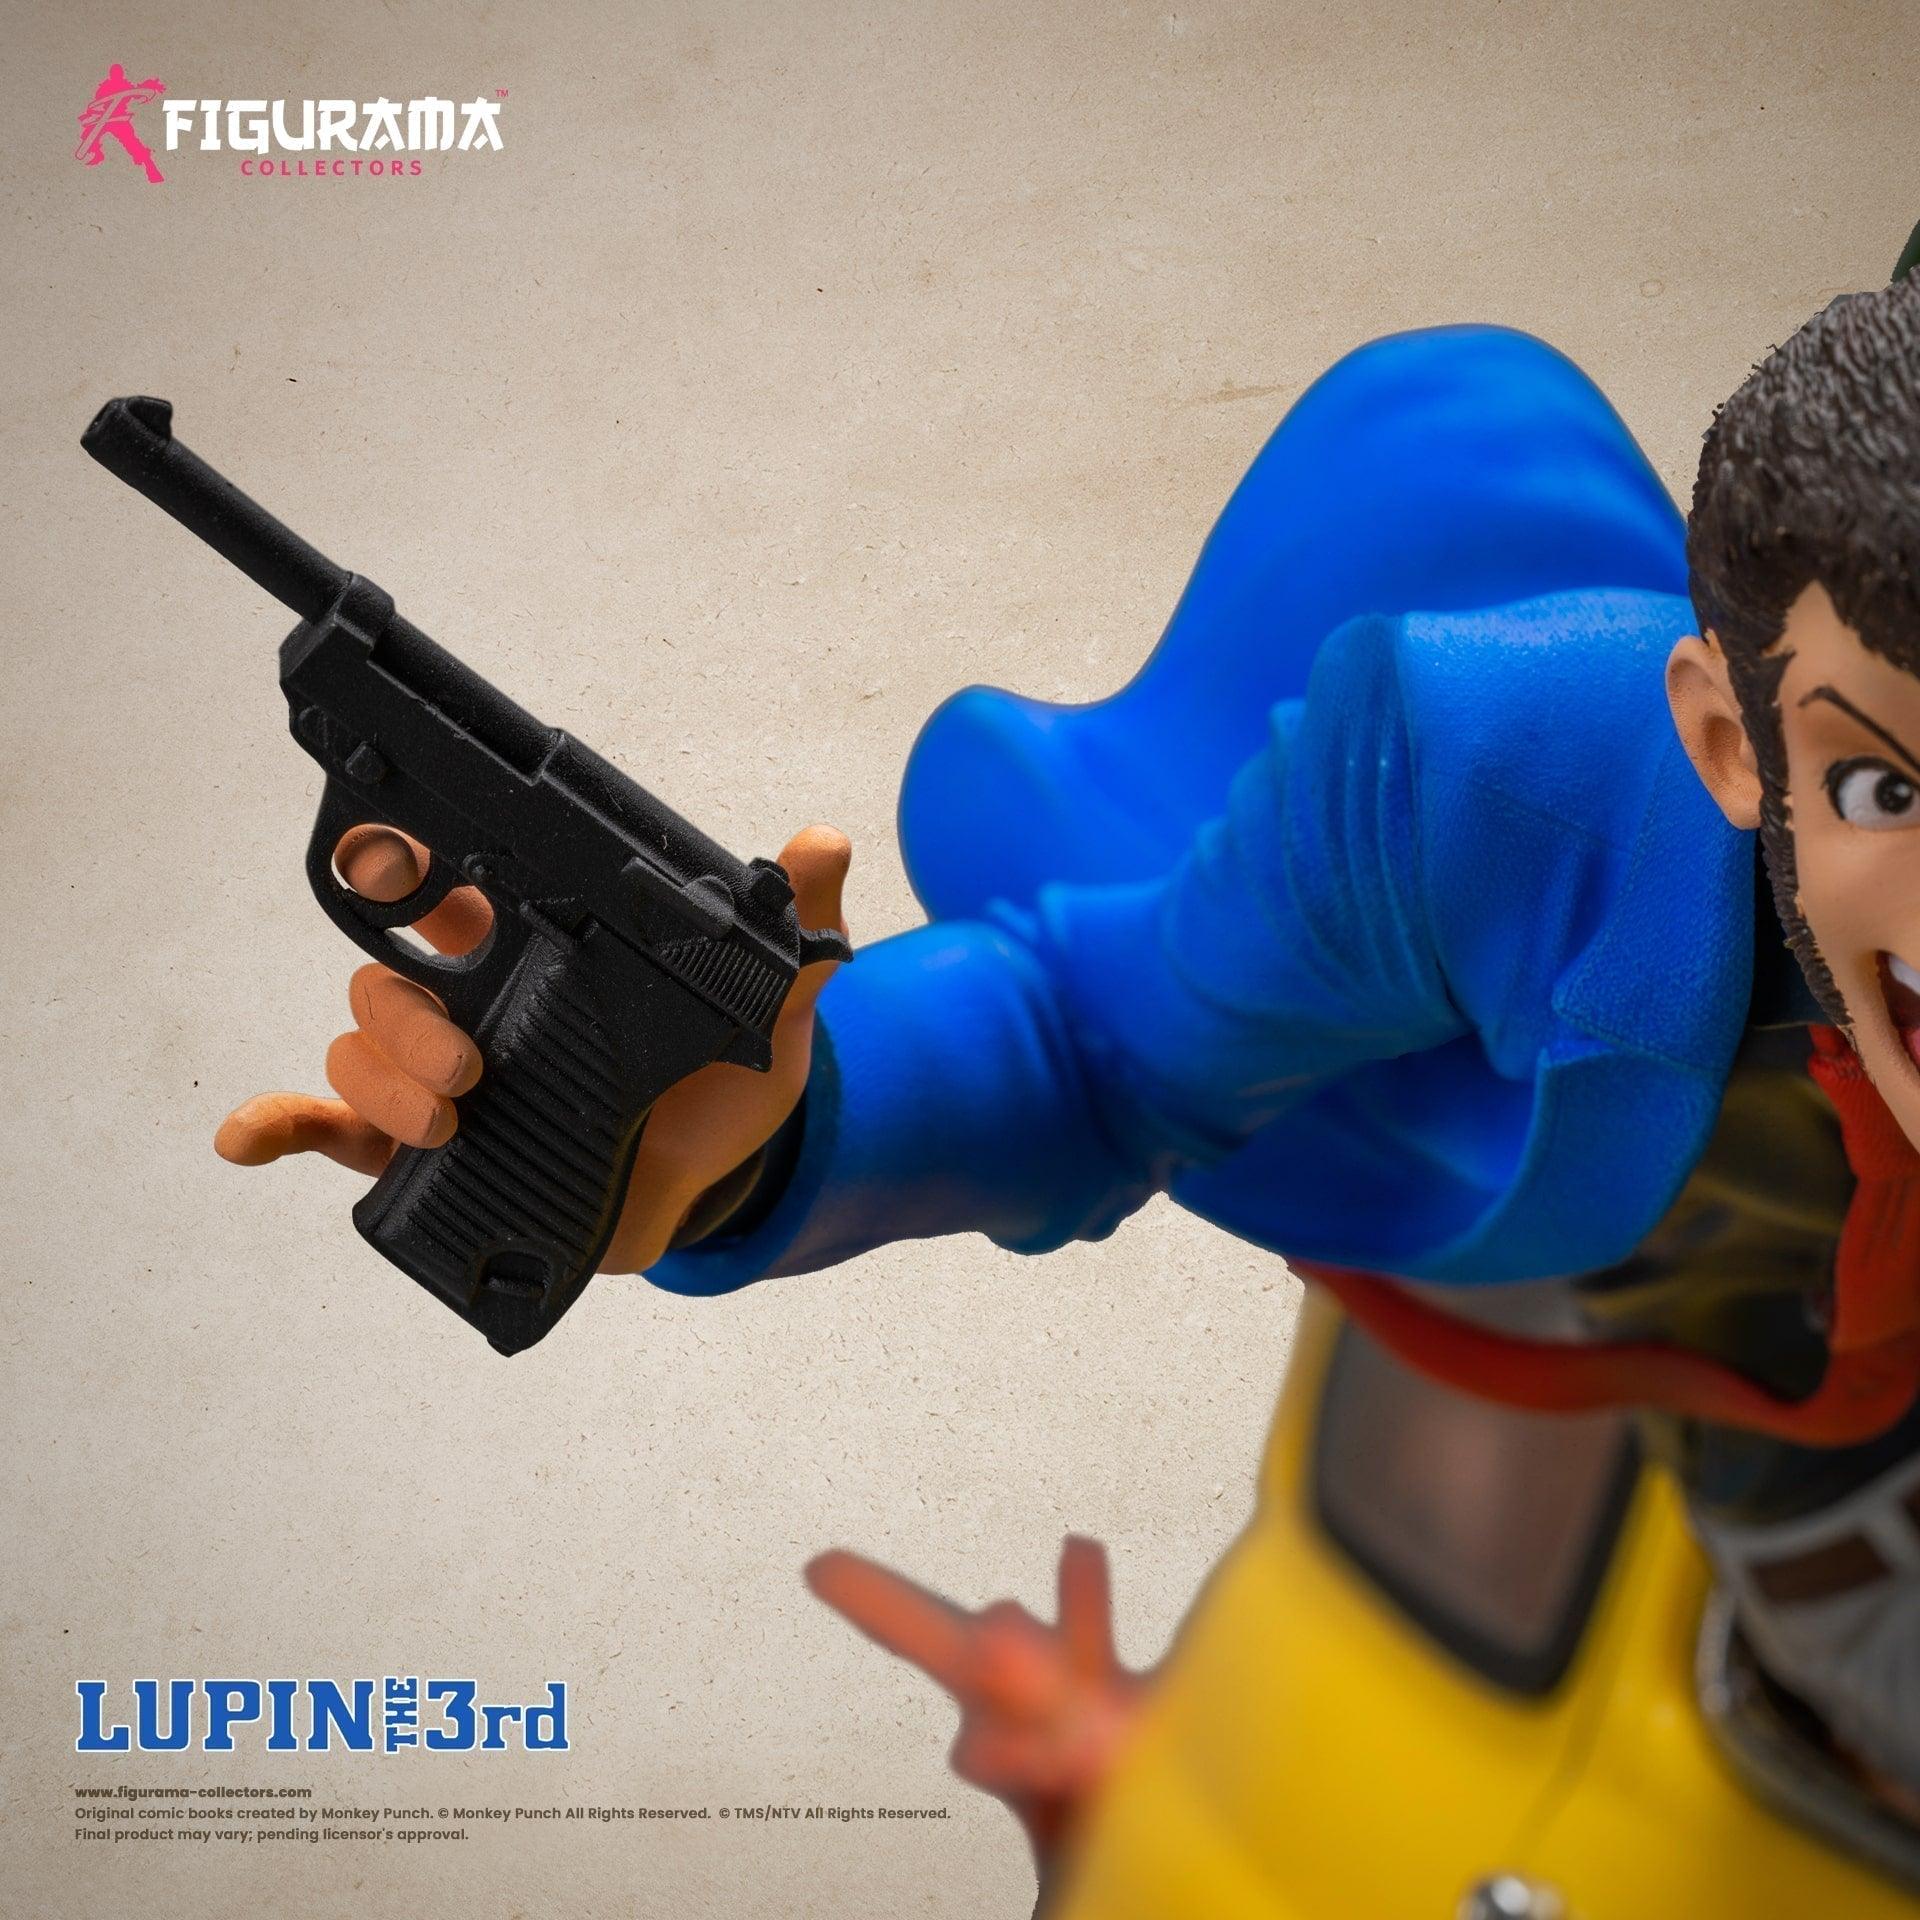 Plan-4- Flexible plan 06 Months- Lupin The 3rd - Lupin, Jigen, & Fujiko Figure Resin Figures Figurama Collectors 